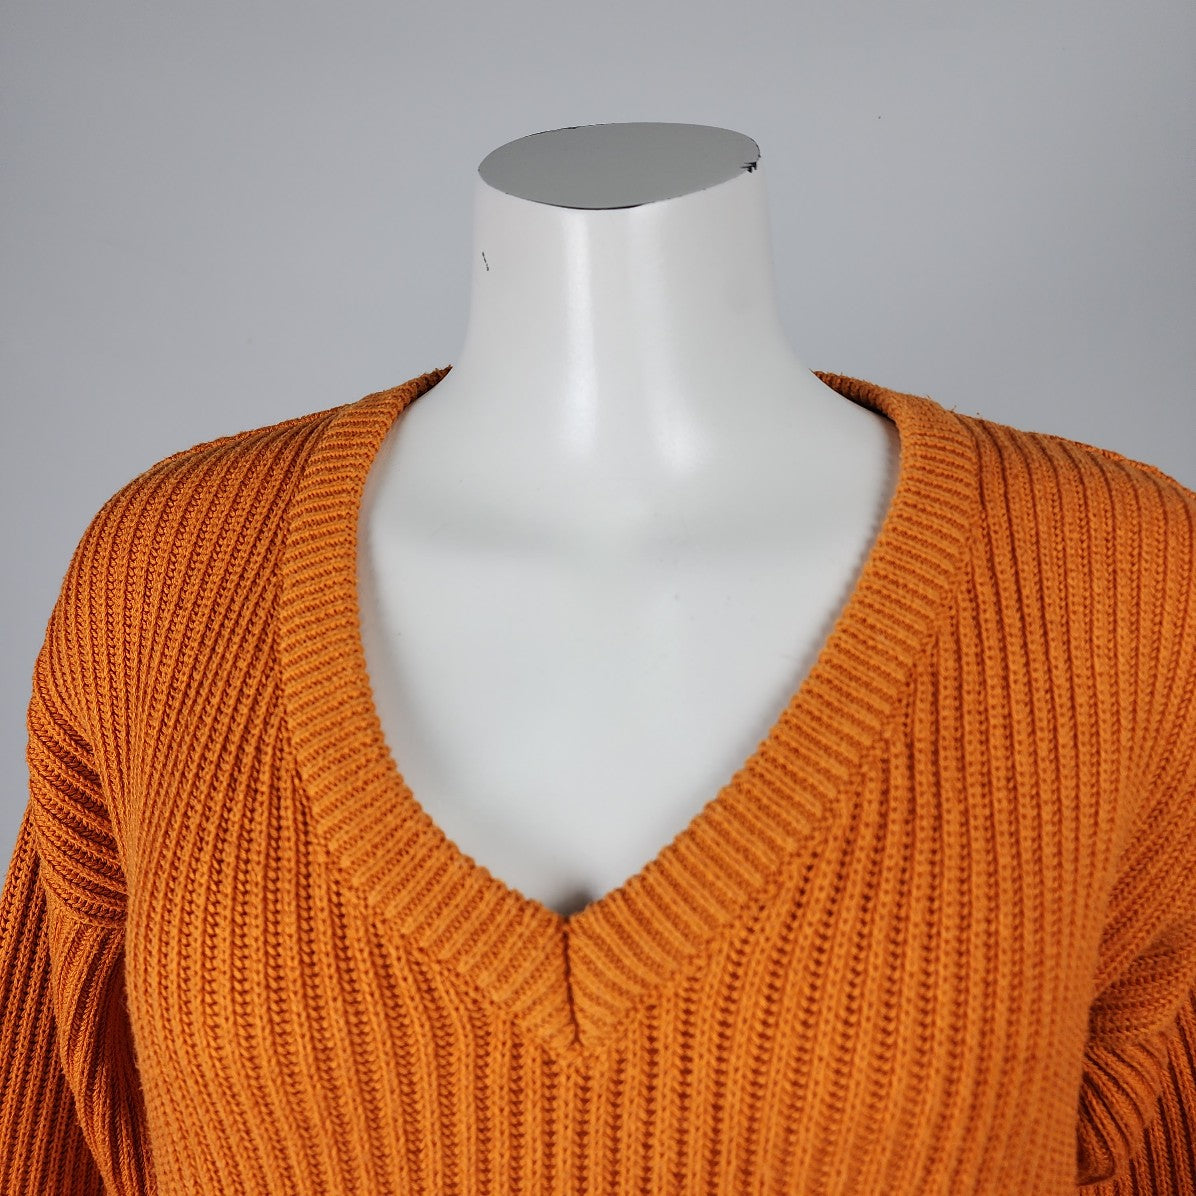 Ichi Orange Knit V Neck Sweater Size S